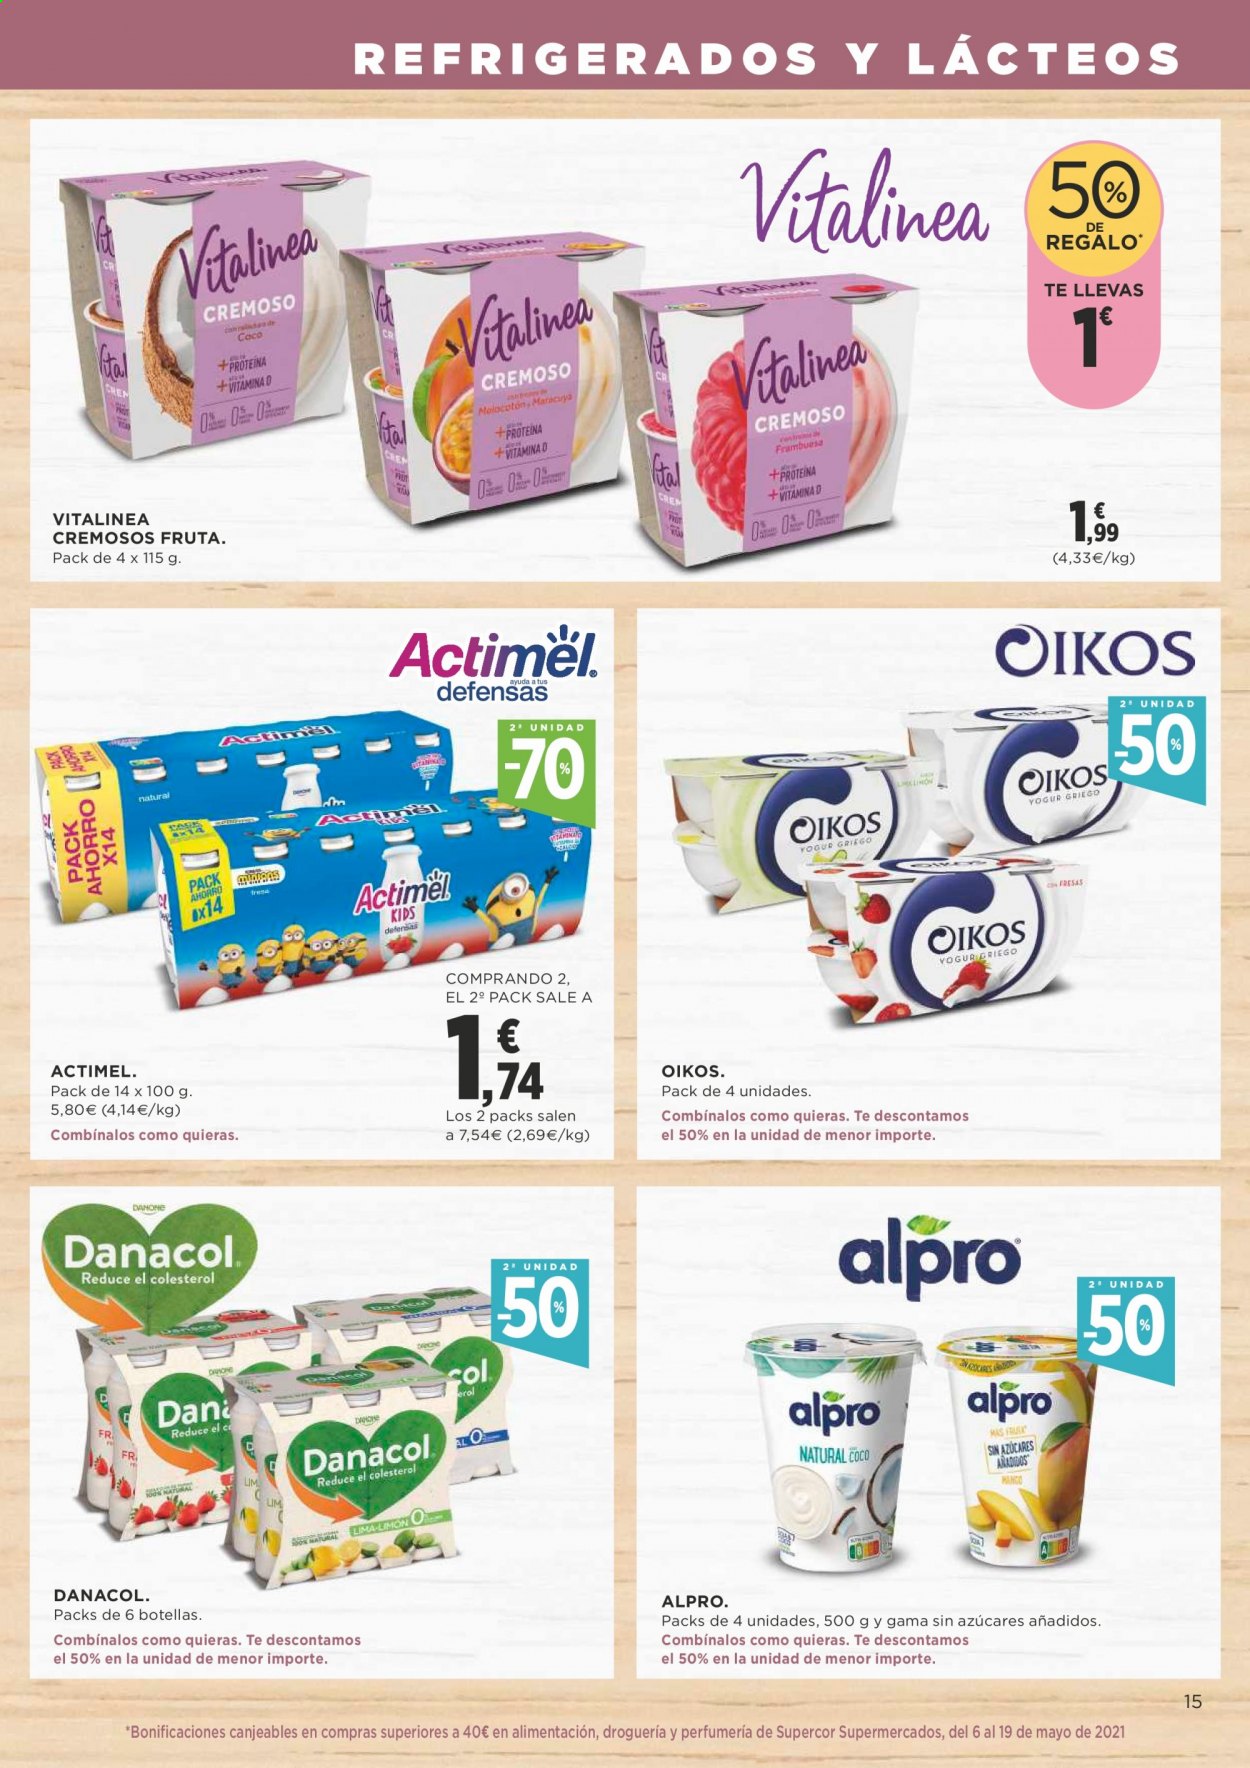 thumbnail - Folleto actual Supercor supermercados - 22/04/21 - 05/05/21 - Ventas - Alpro, Danacol, Actimel, botella. Página 15.